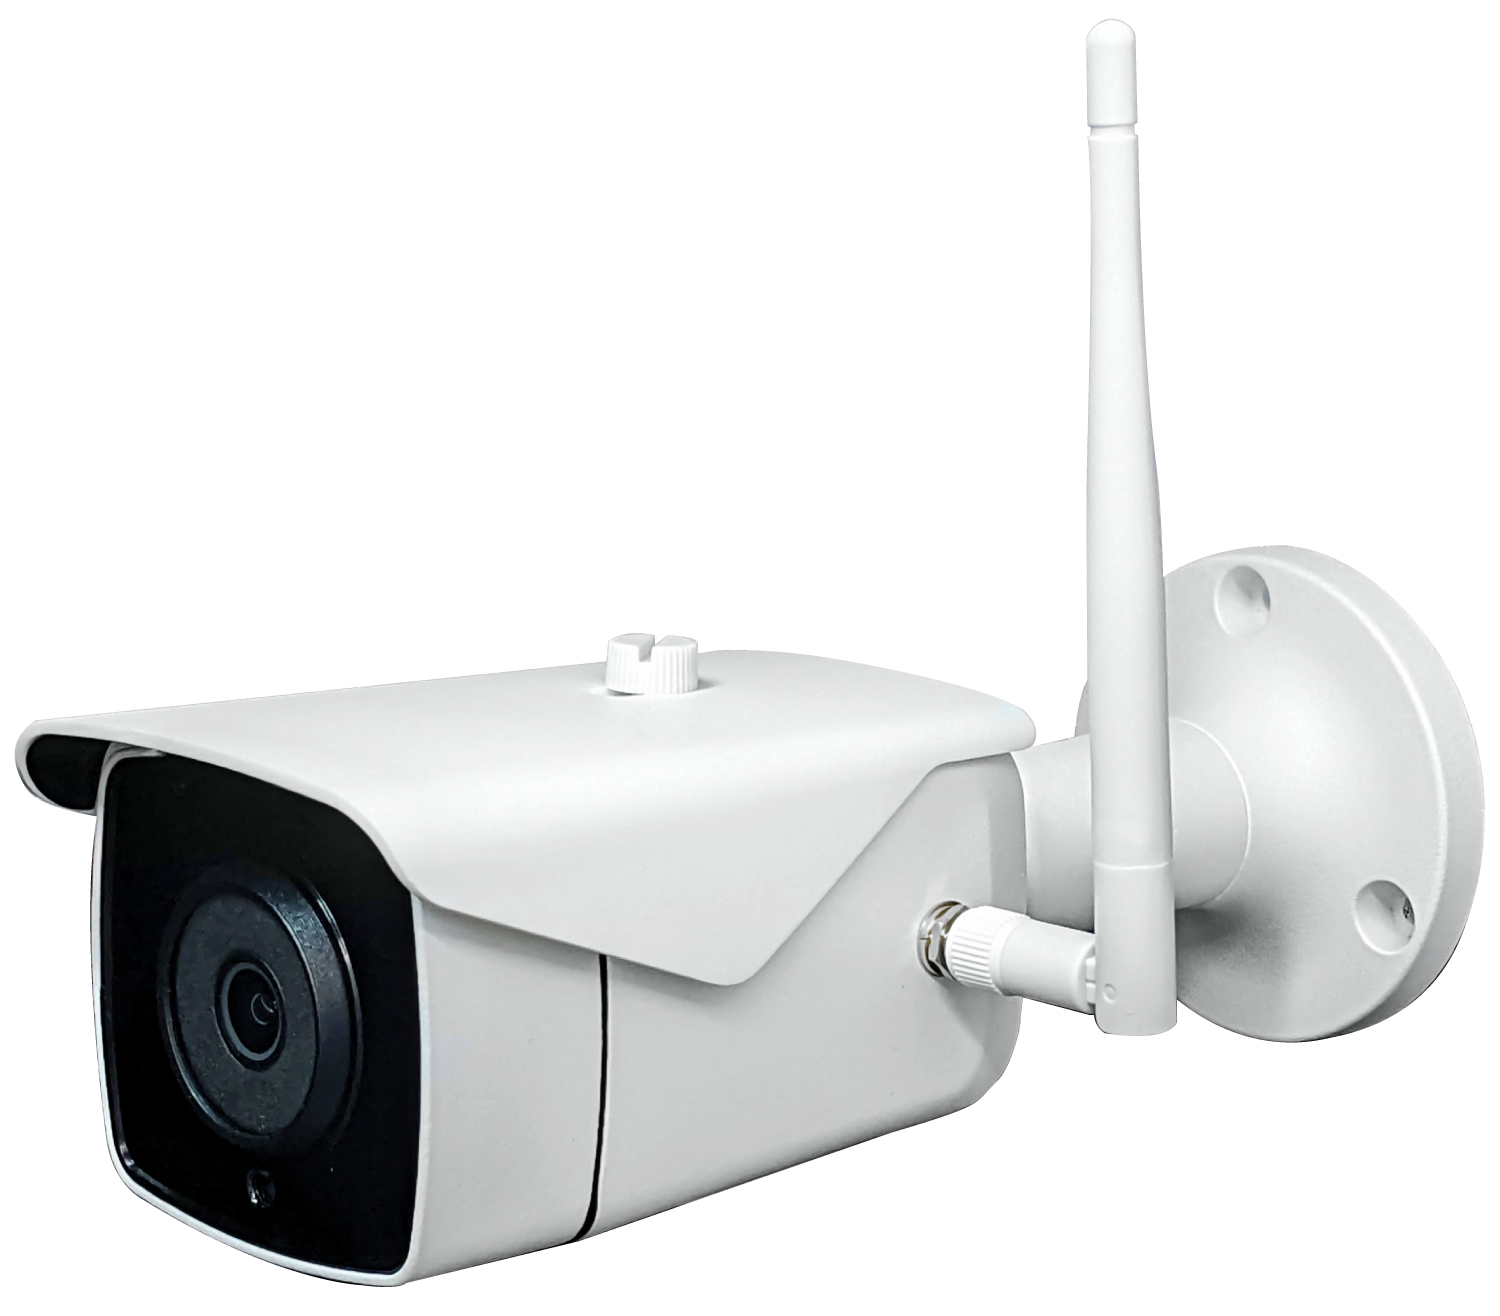  5.3MP超高解像度 防水バレット型 Wi-Fiカメラ